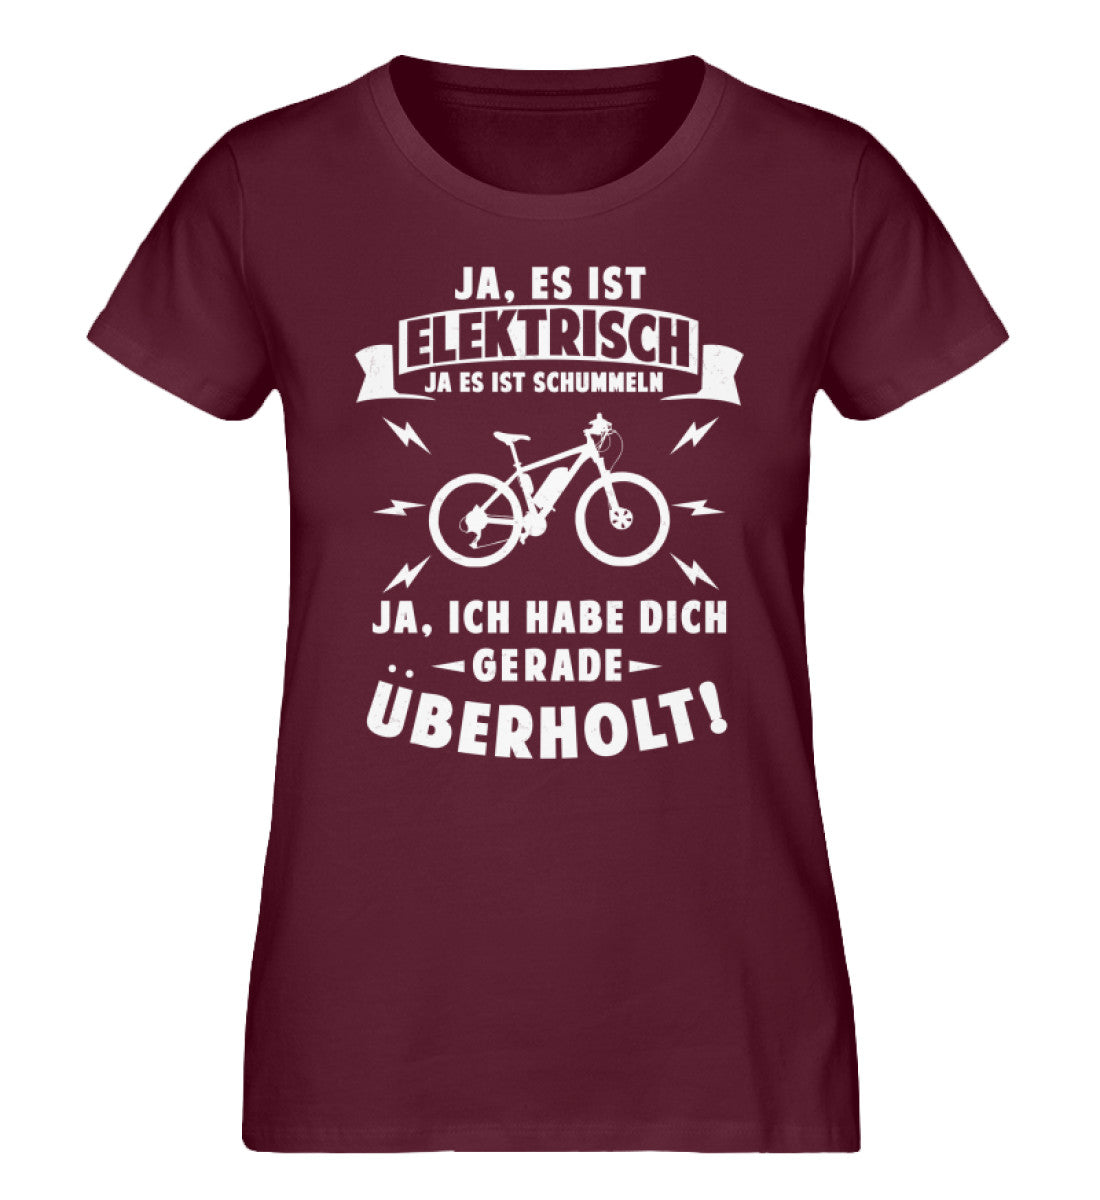 Ist elektrisch - Habe dich überholt - Damen Organic T-Shirt e-bike Weinrot